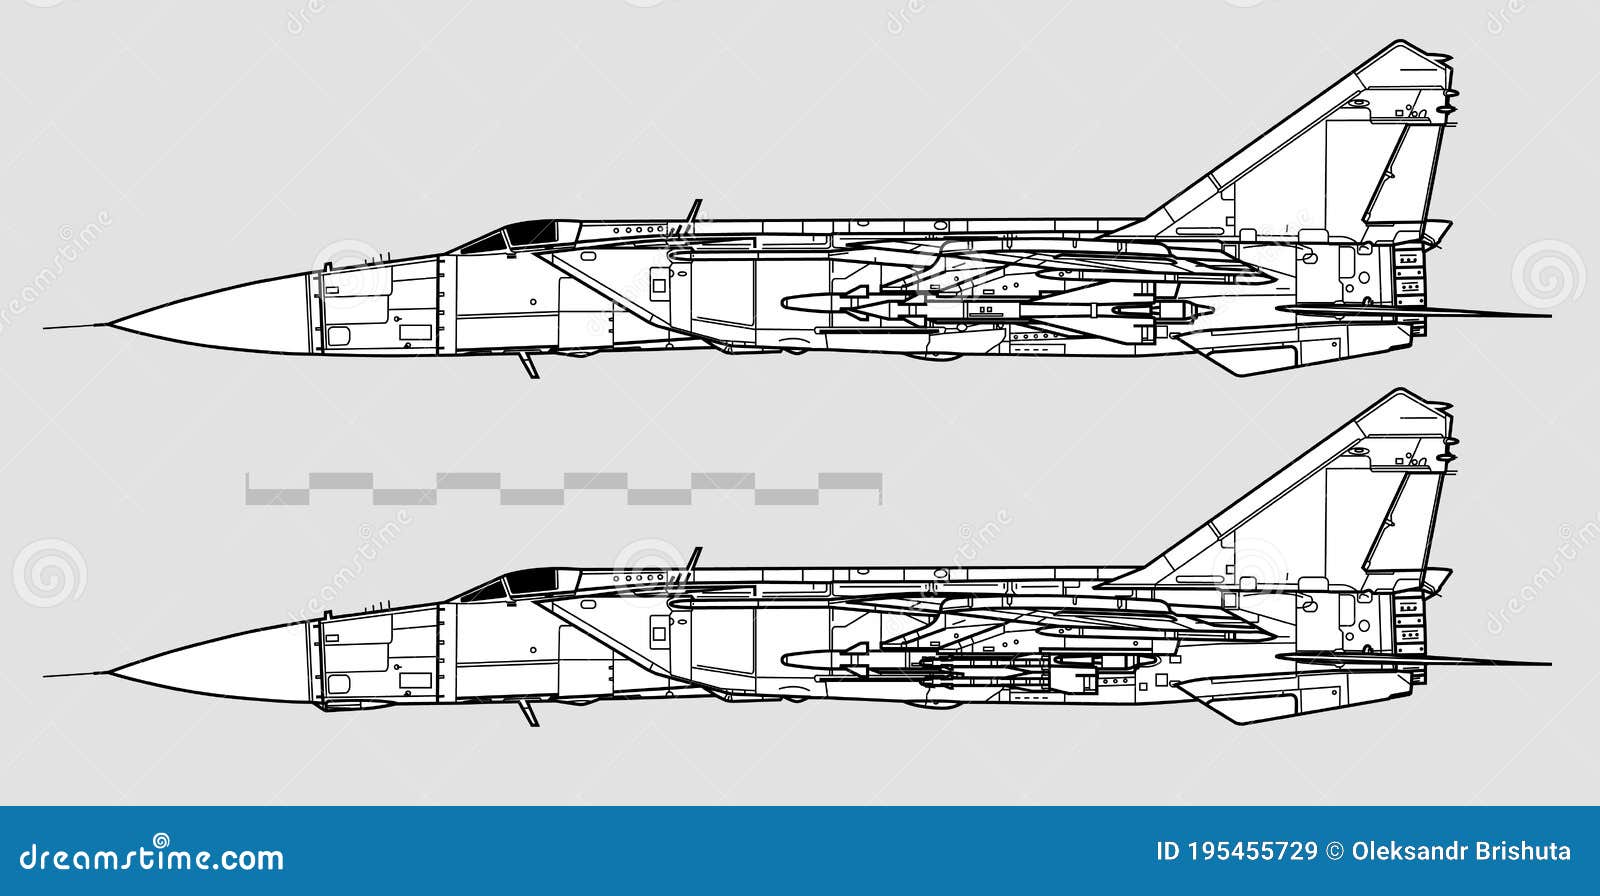 mikoyan mig-25 foxbat.  drawing of supersonic interceptor.